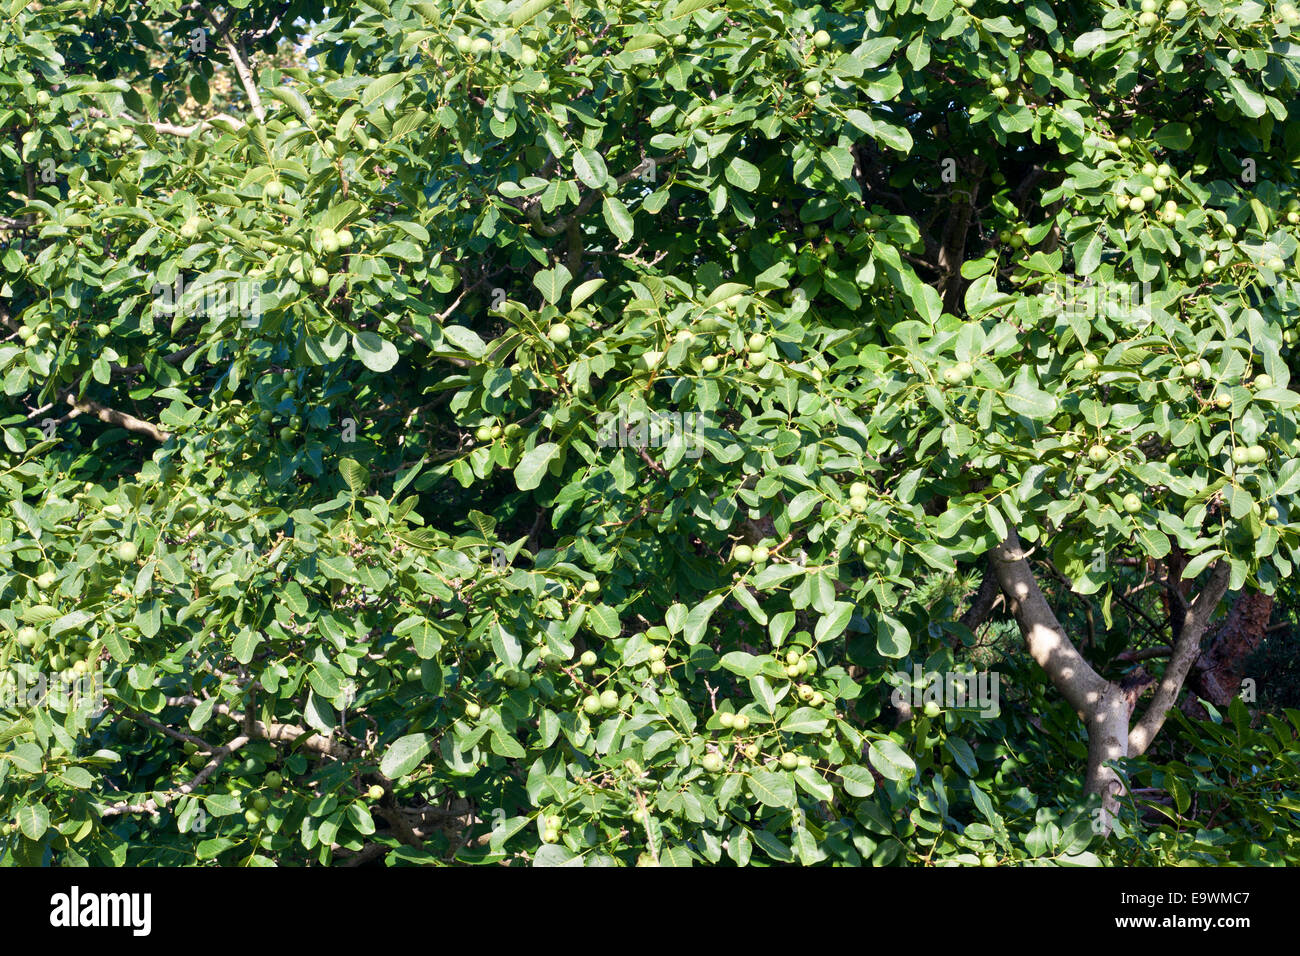 Foliage of a Walnut Tree with ripening walnuts. Stock Photo